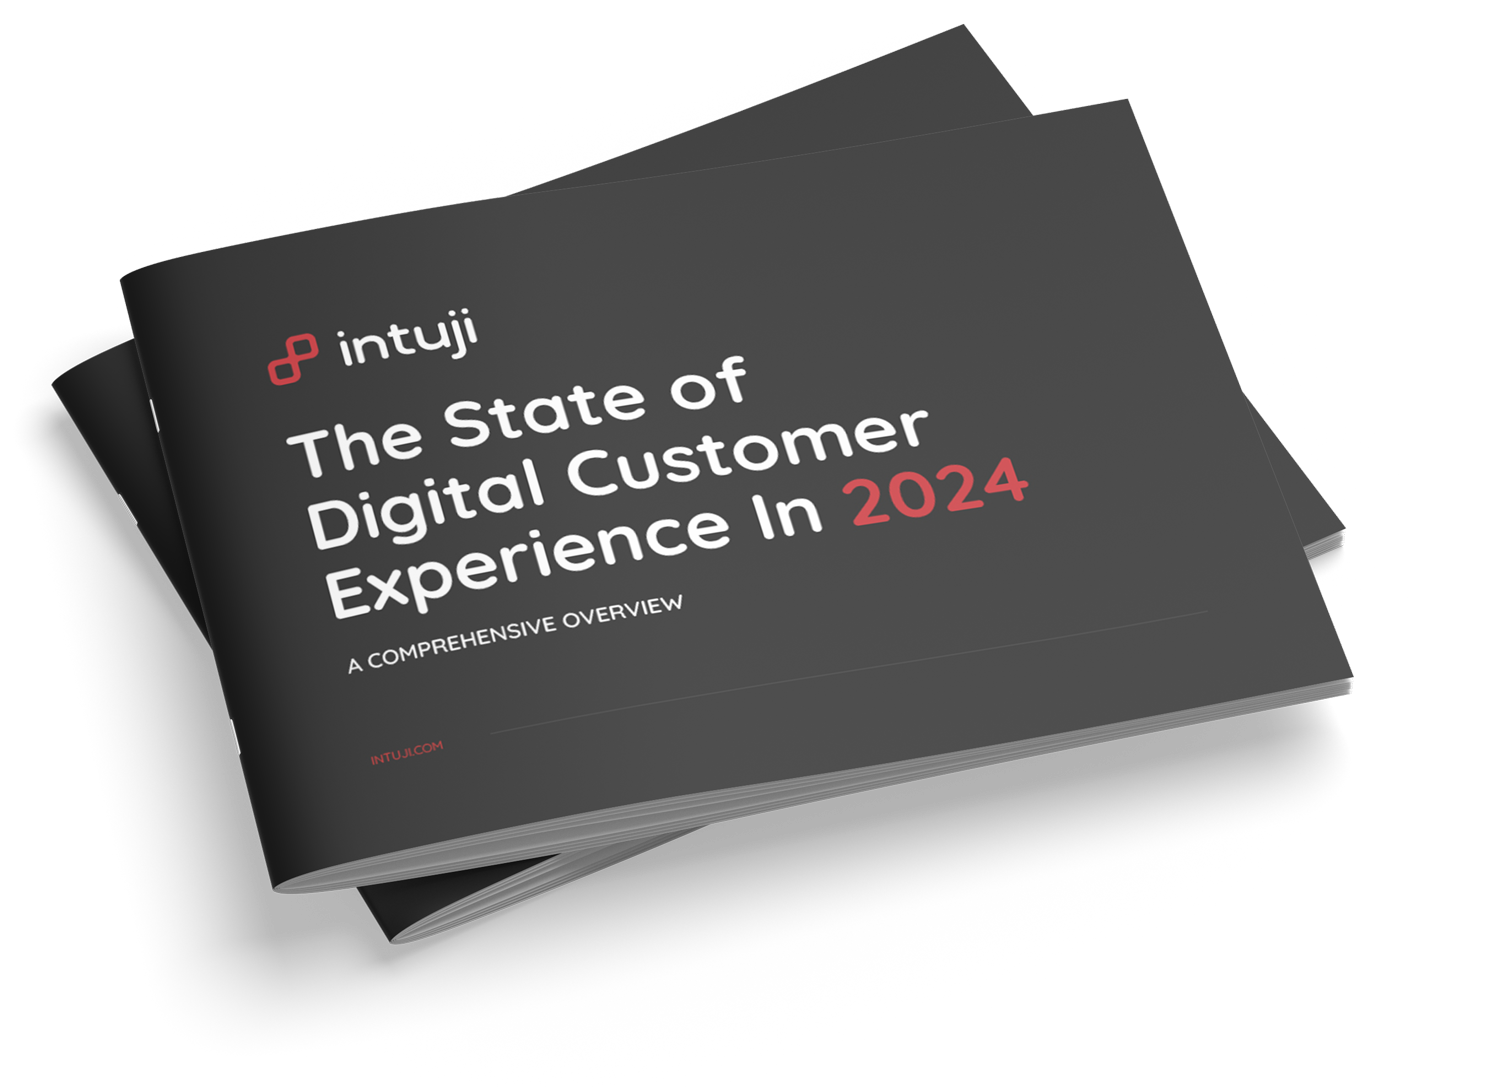 state of digital customer